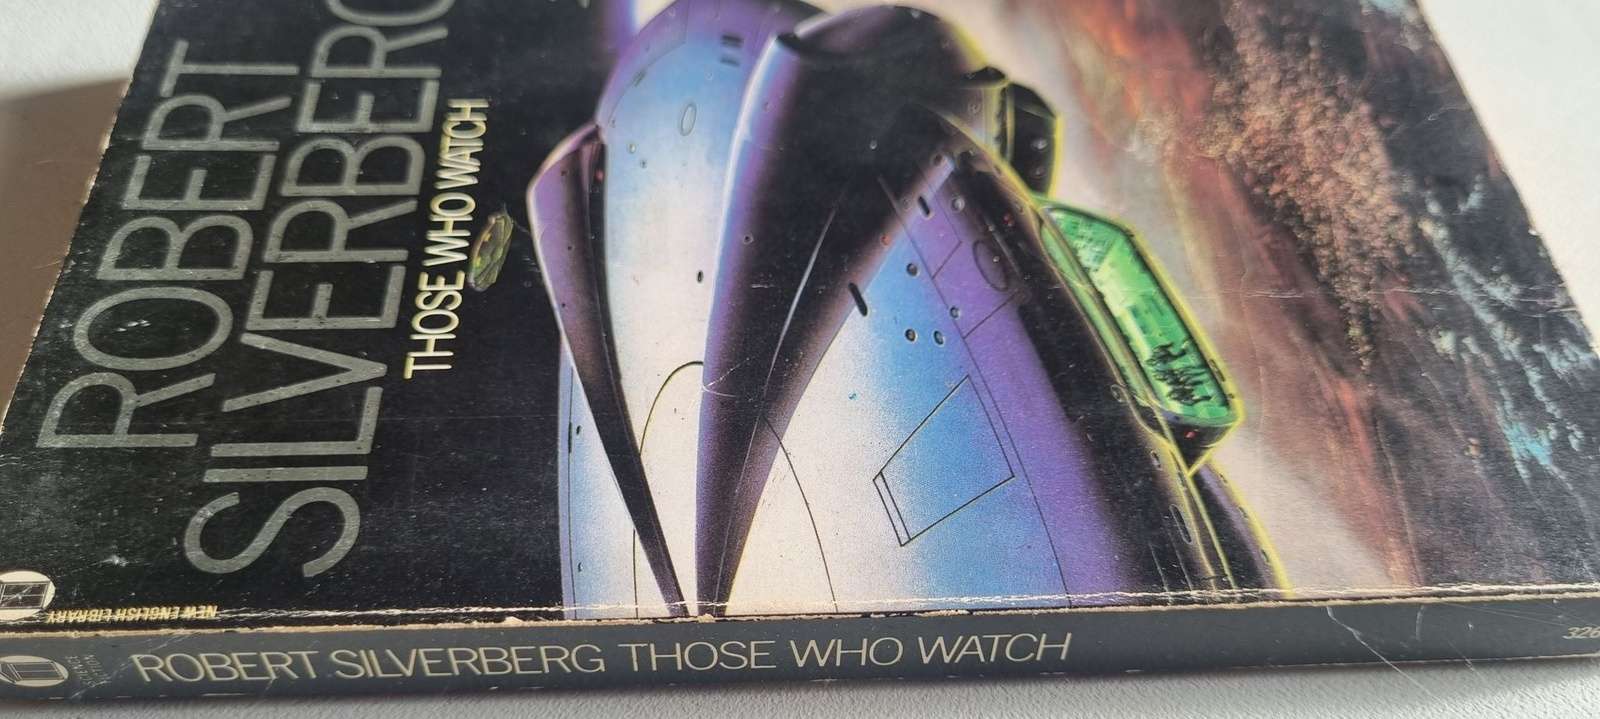 Those Who Watch - Robert Silverberg